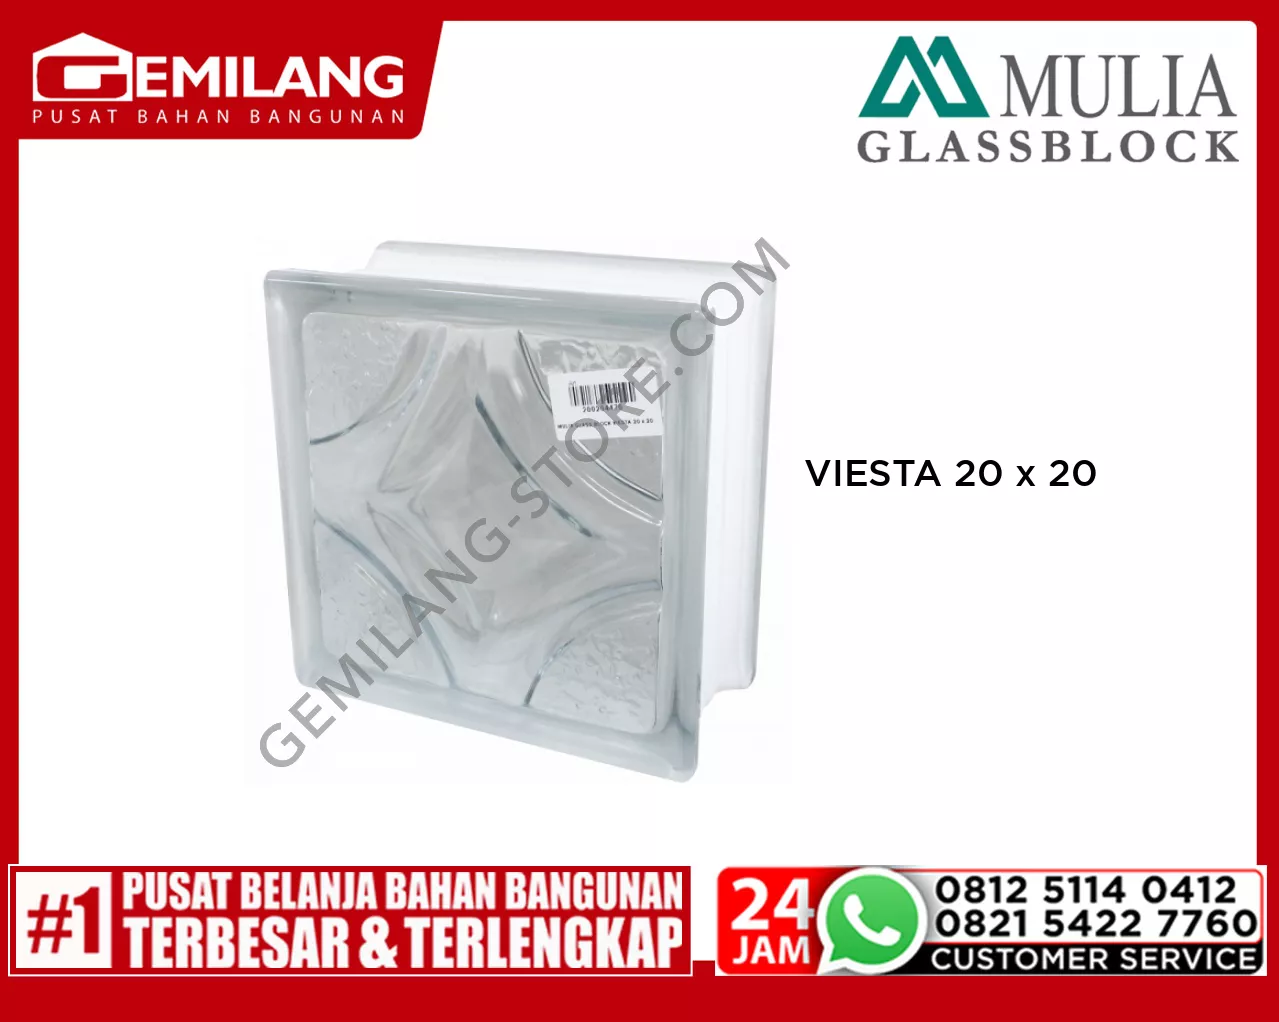 MULIA GLASS BLOCK VIESTA 20 x 20